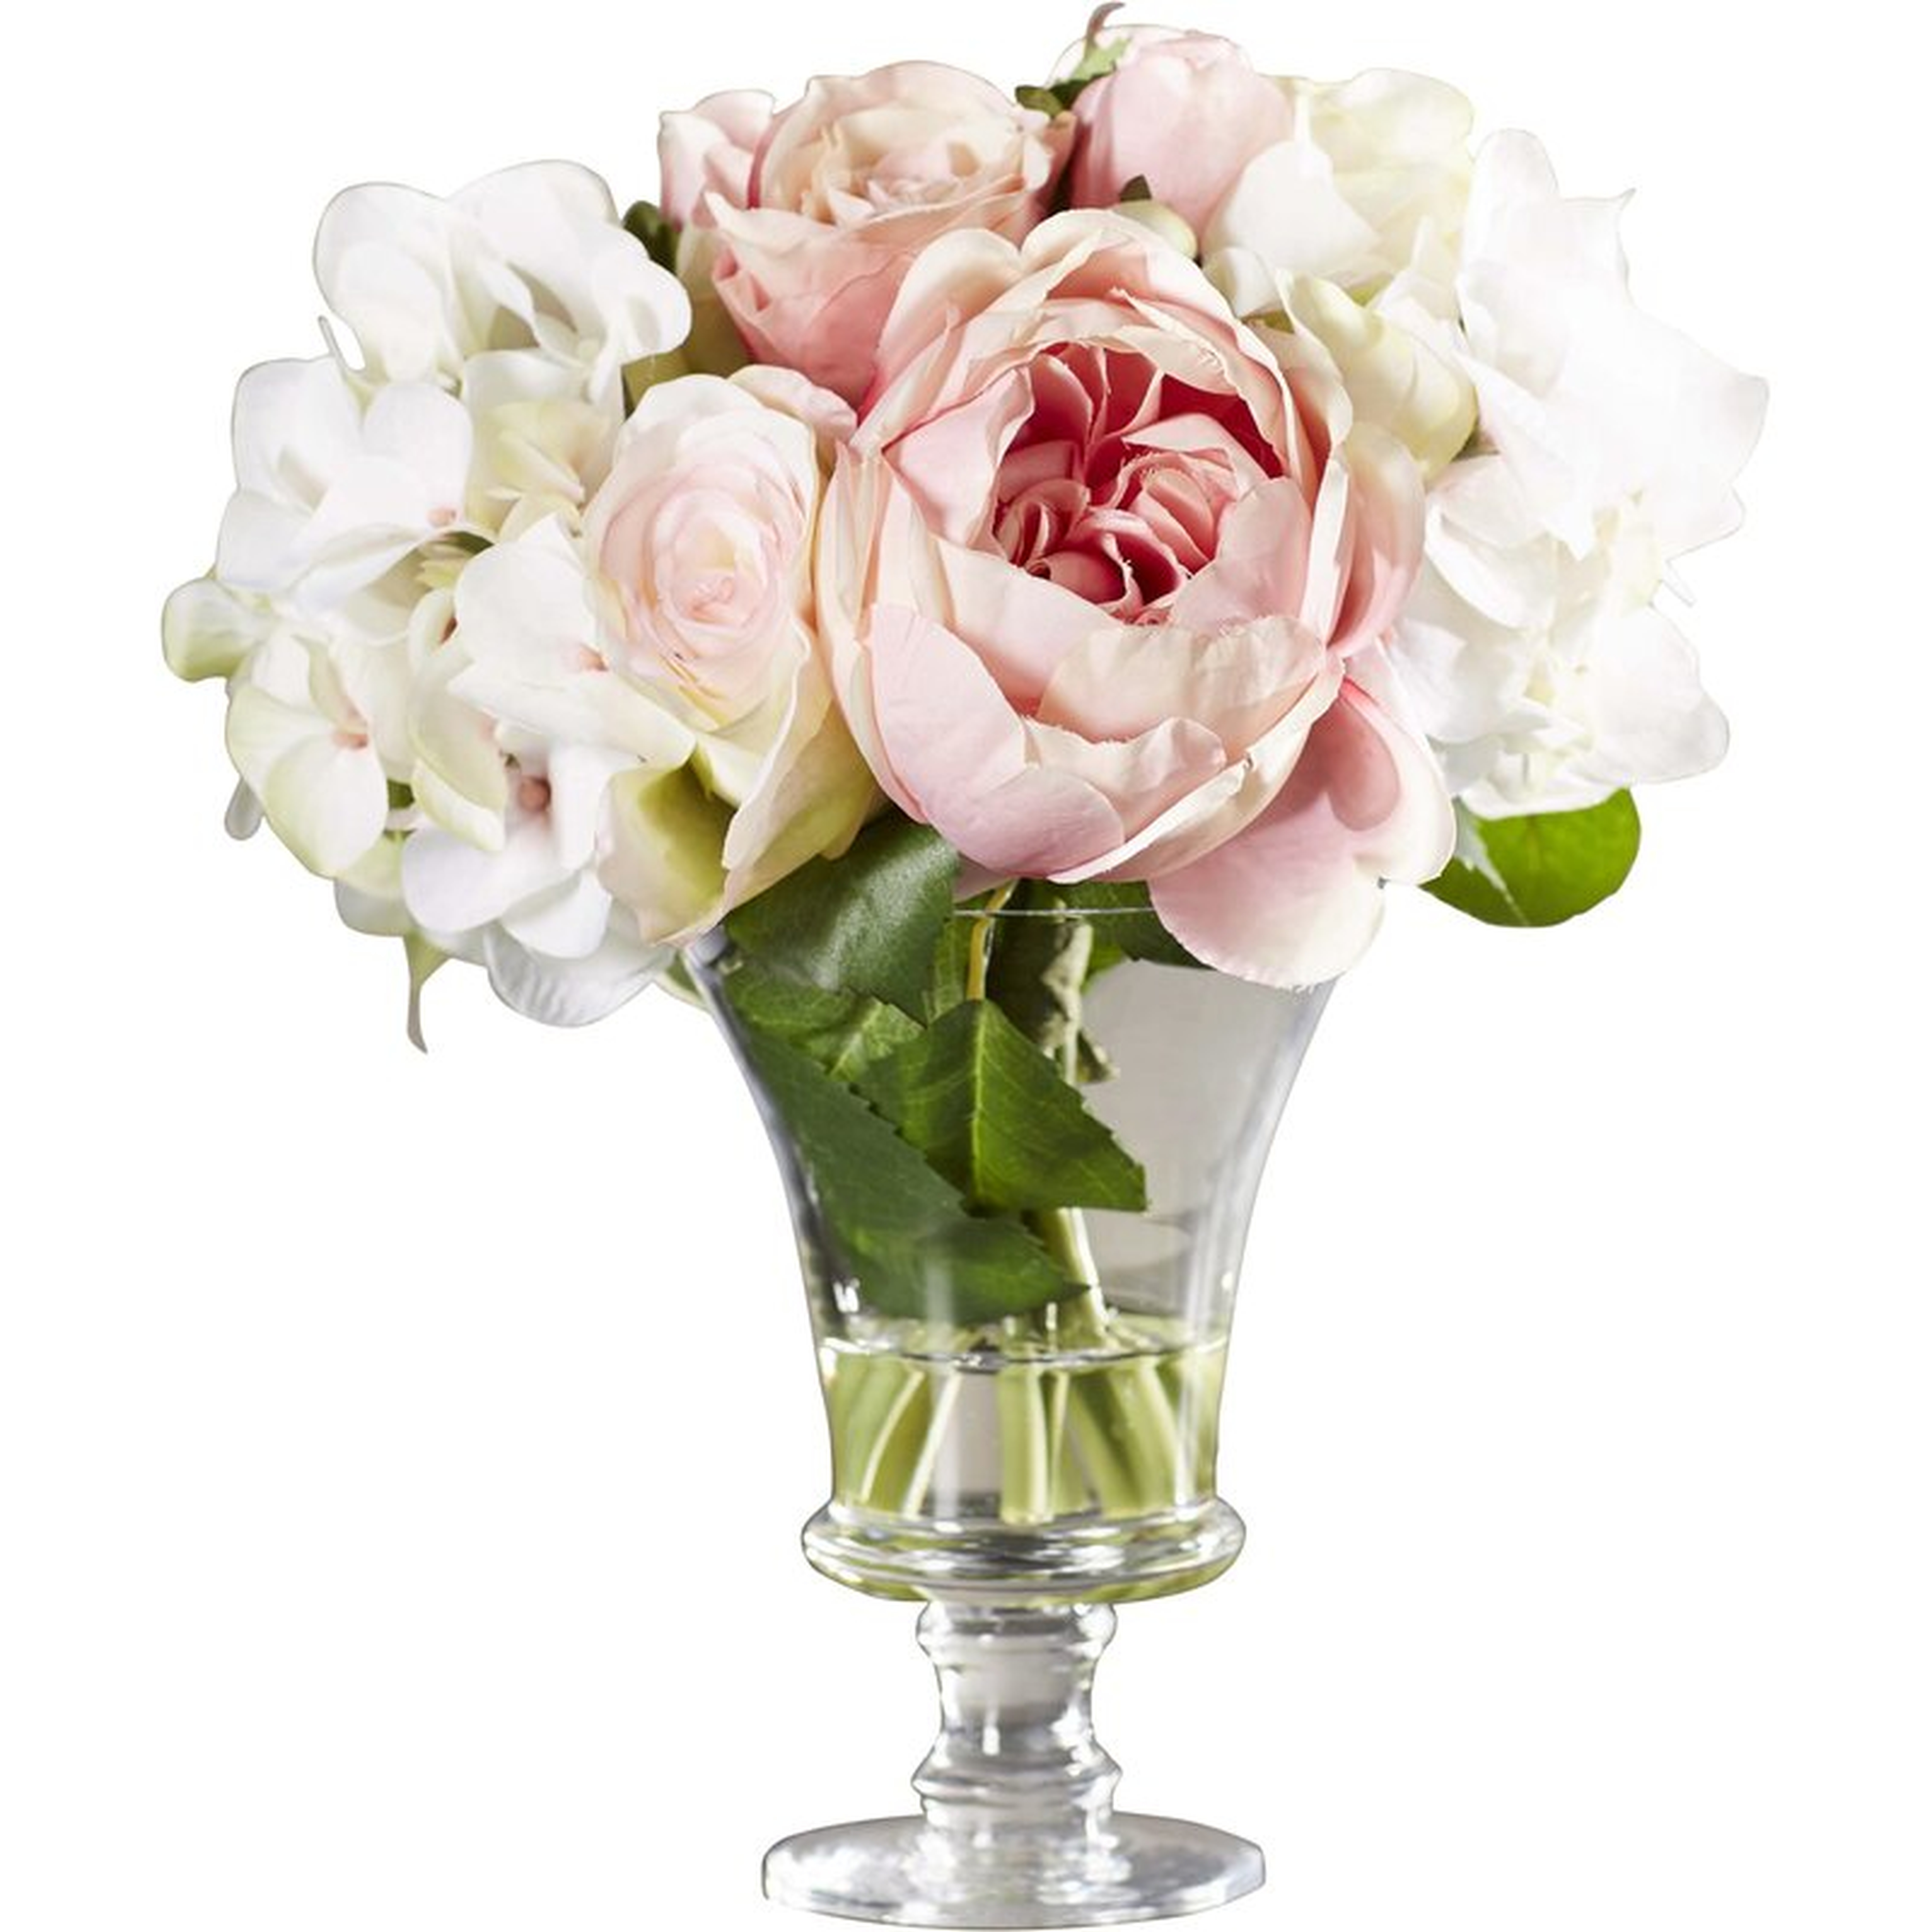 Faux Rose and Hydrangea Floral Arrangement in Pedestal Glass Vase - Wayfair